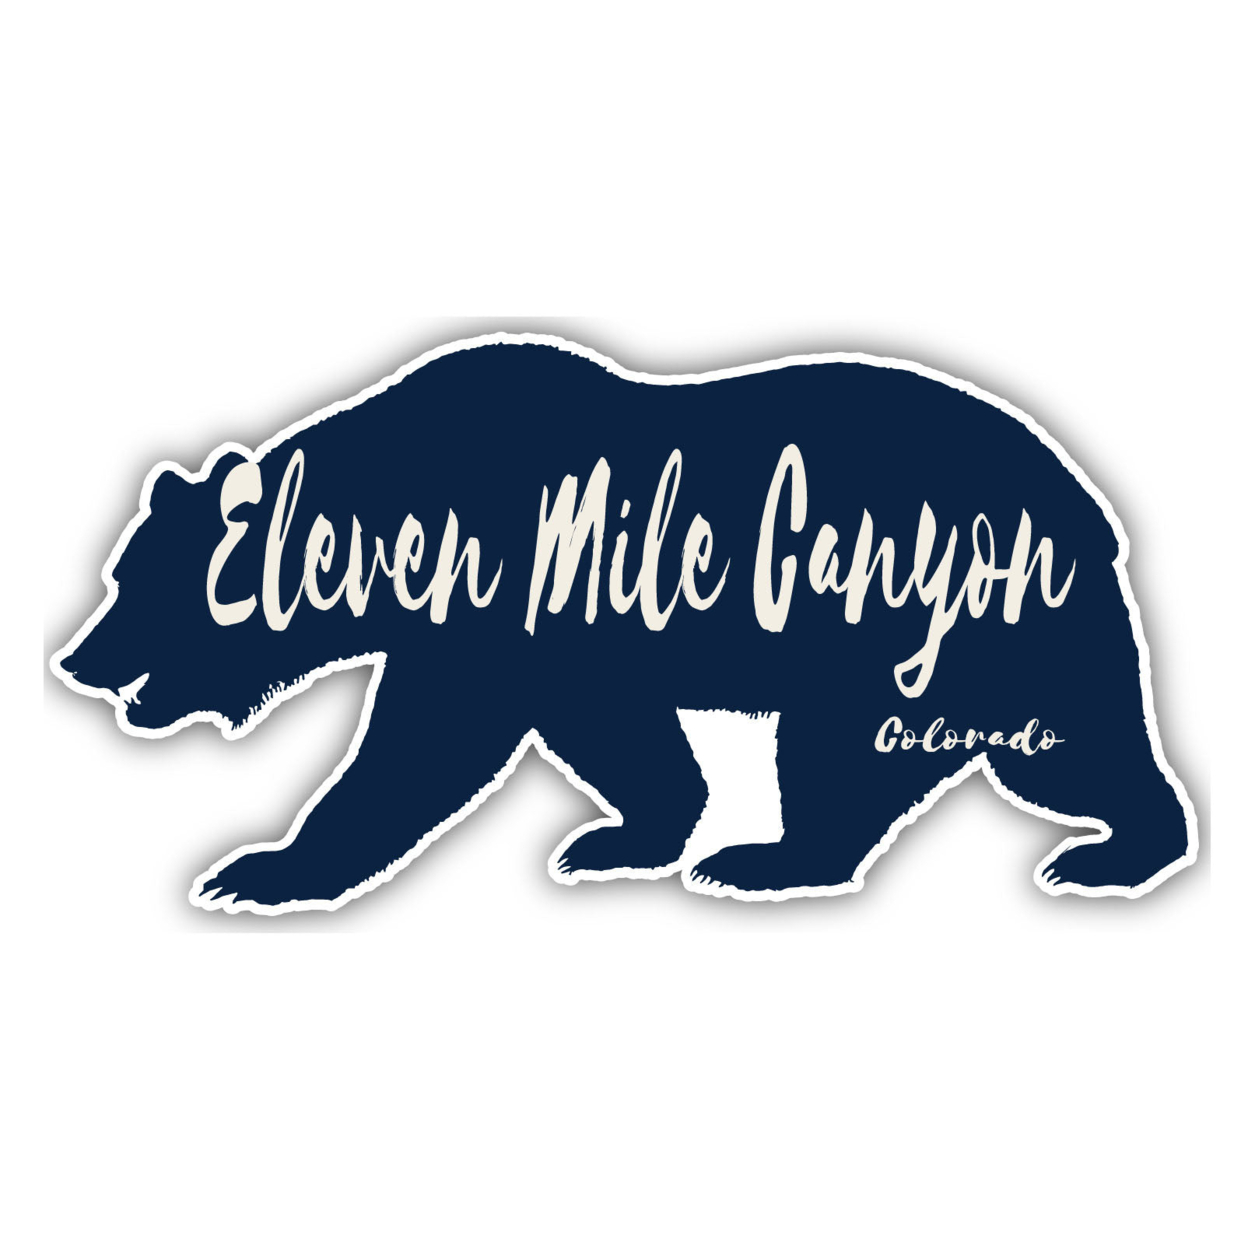 Eleven Mile Canyon Colorado Souvenir Decorative Stickers (Choose Theme And Size) - Single Unit, 10-Inch, Tent